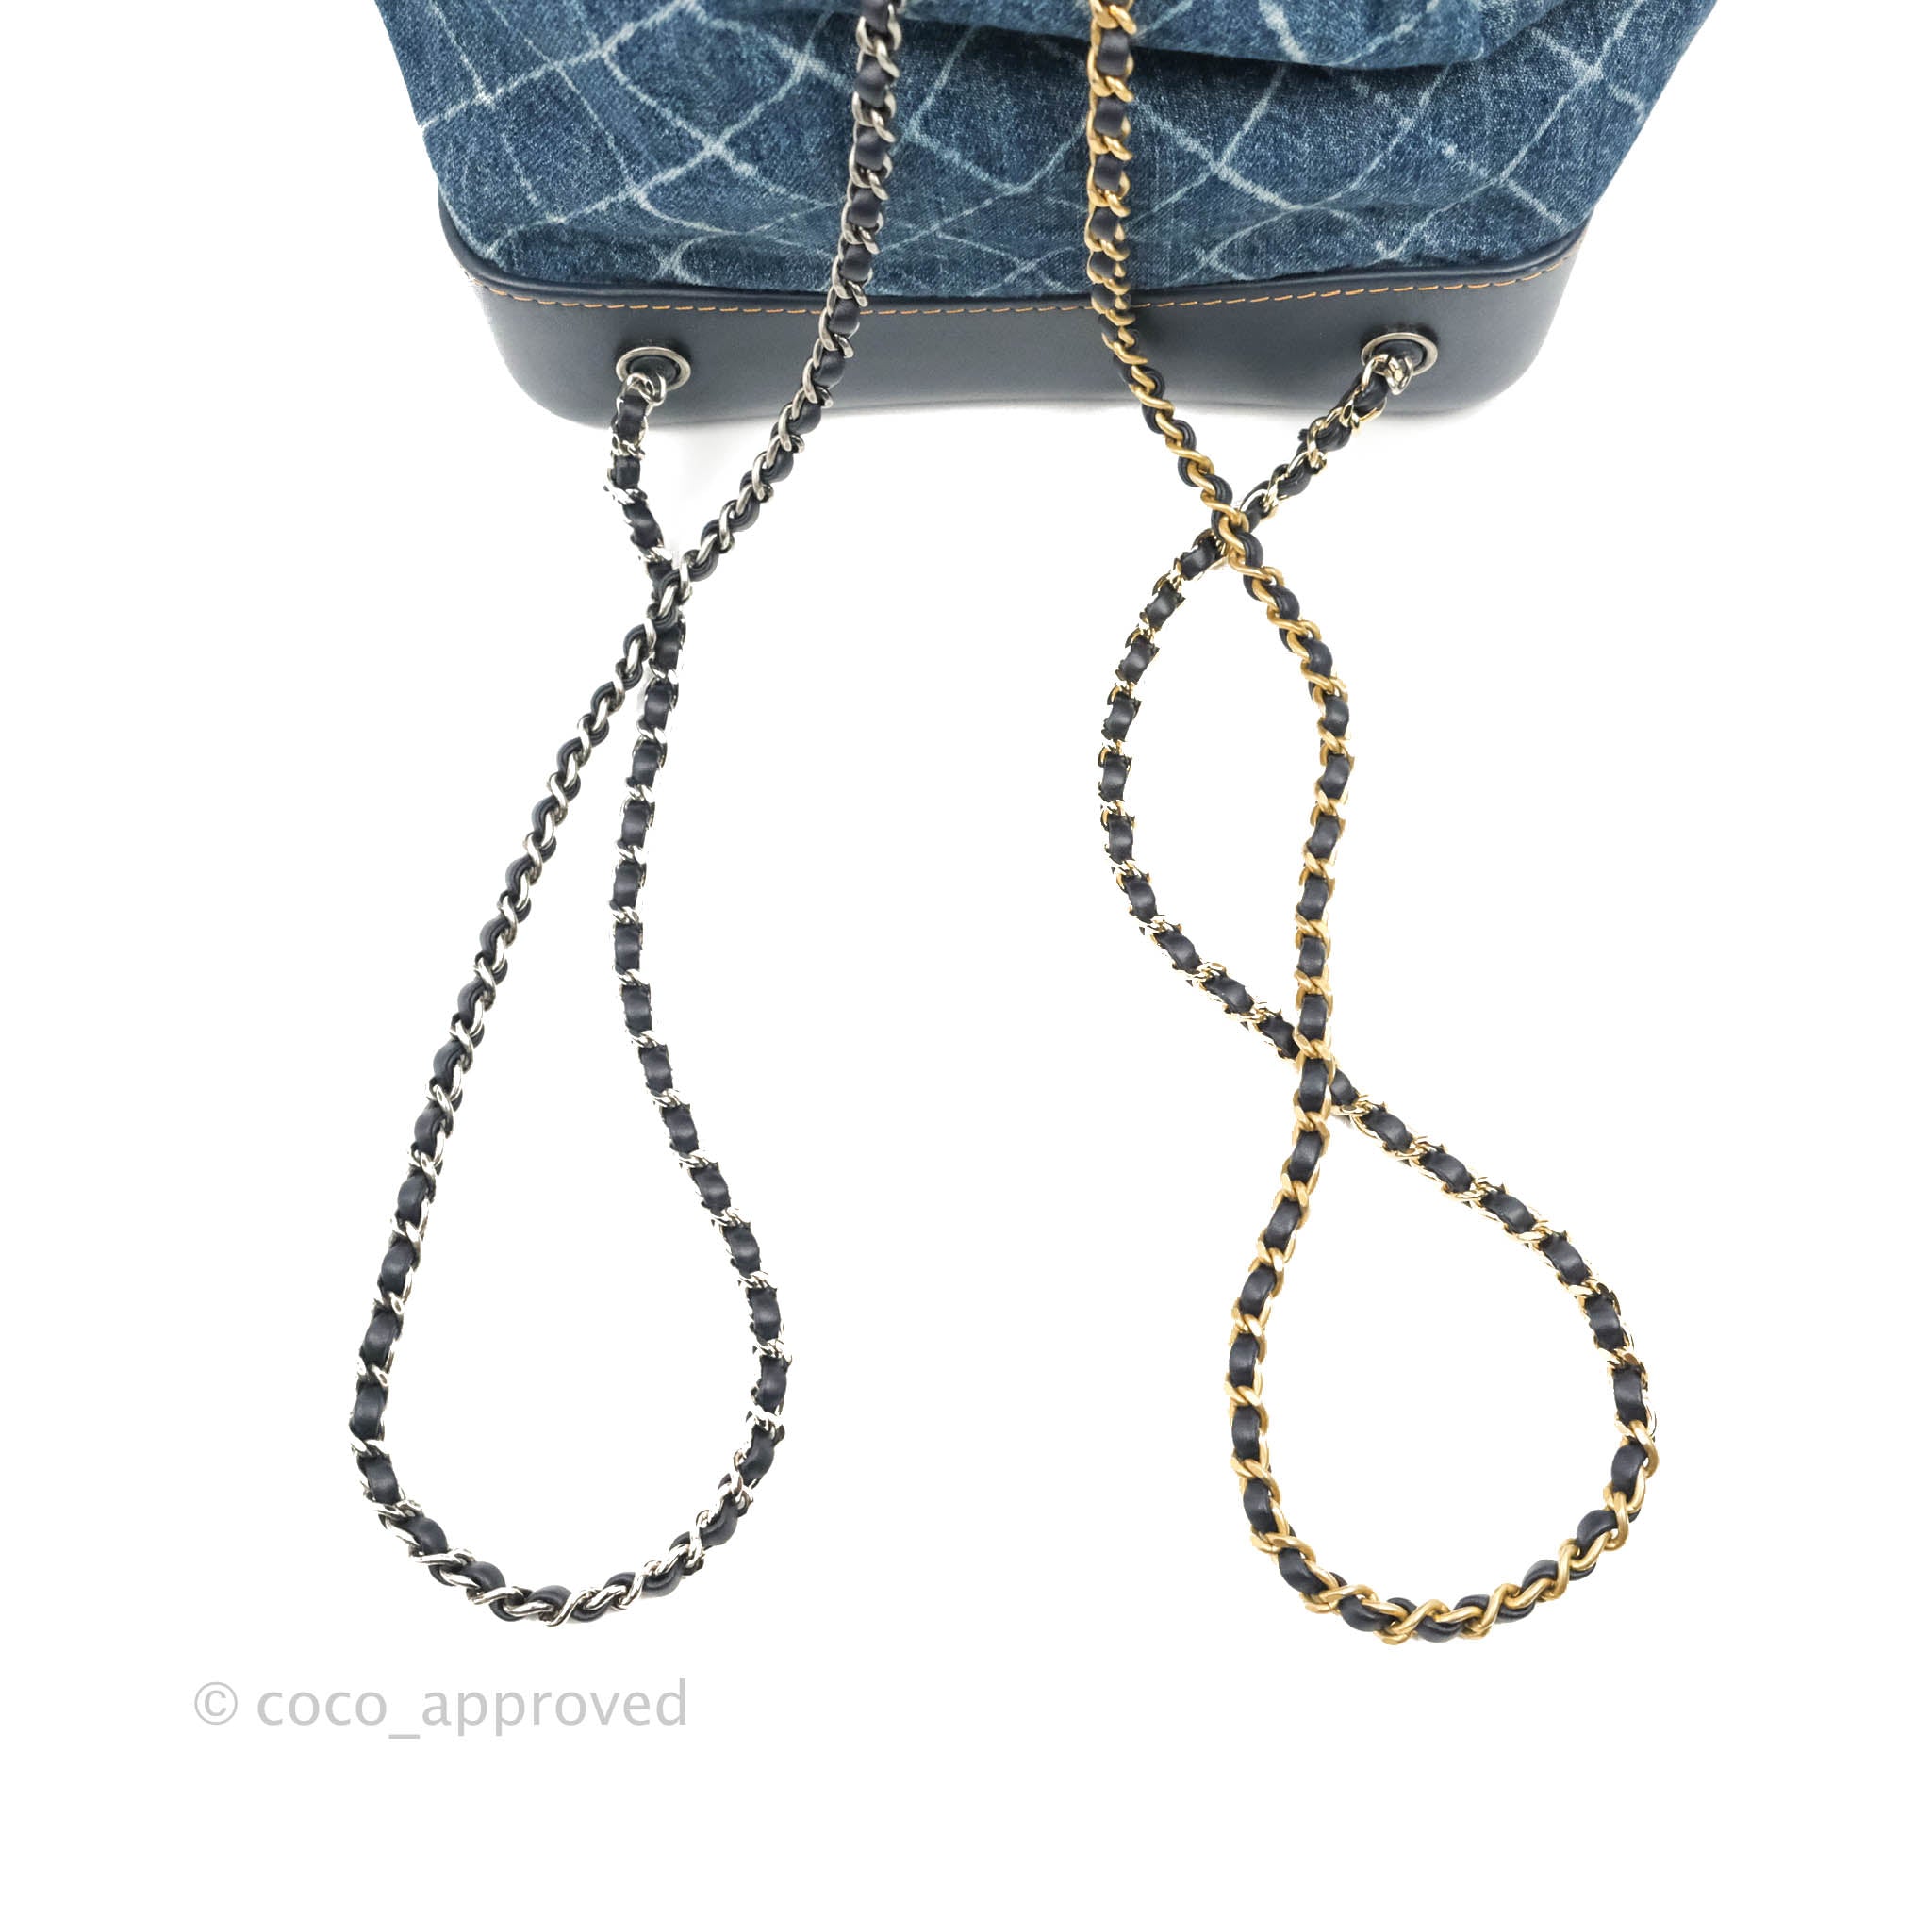 Chanel Gabrielle Hobo Denim Handbag Bag